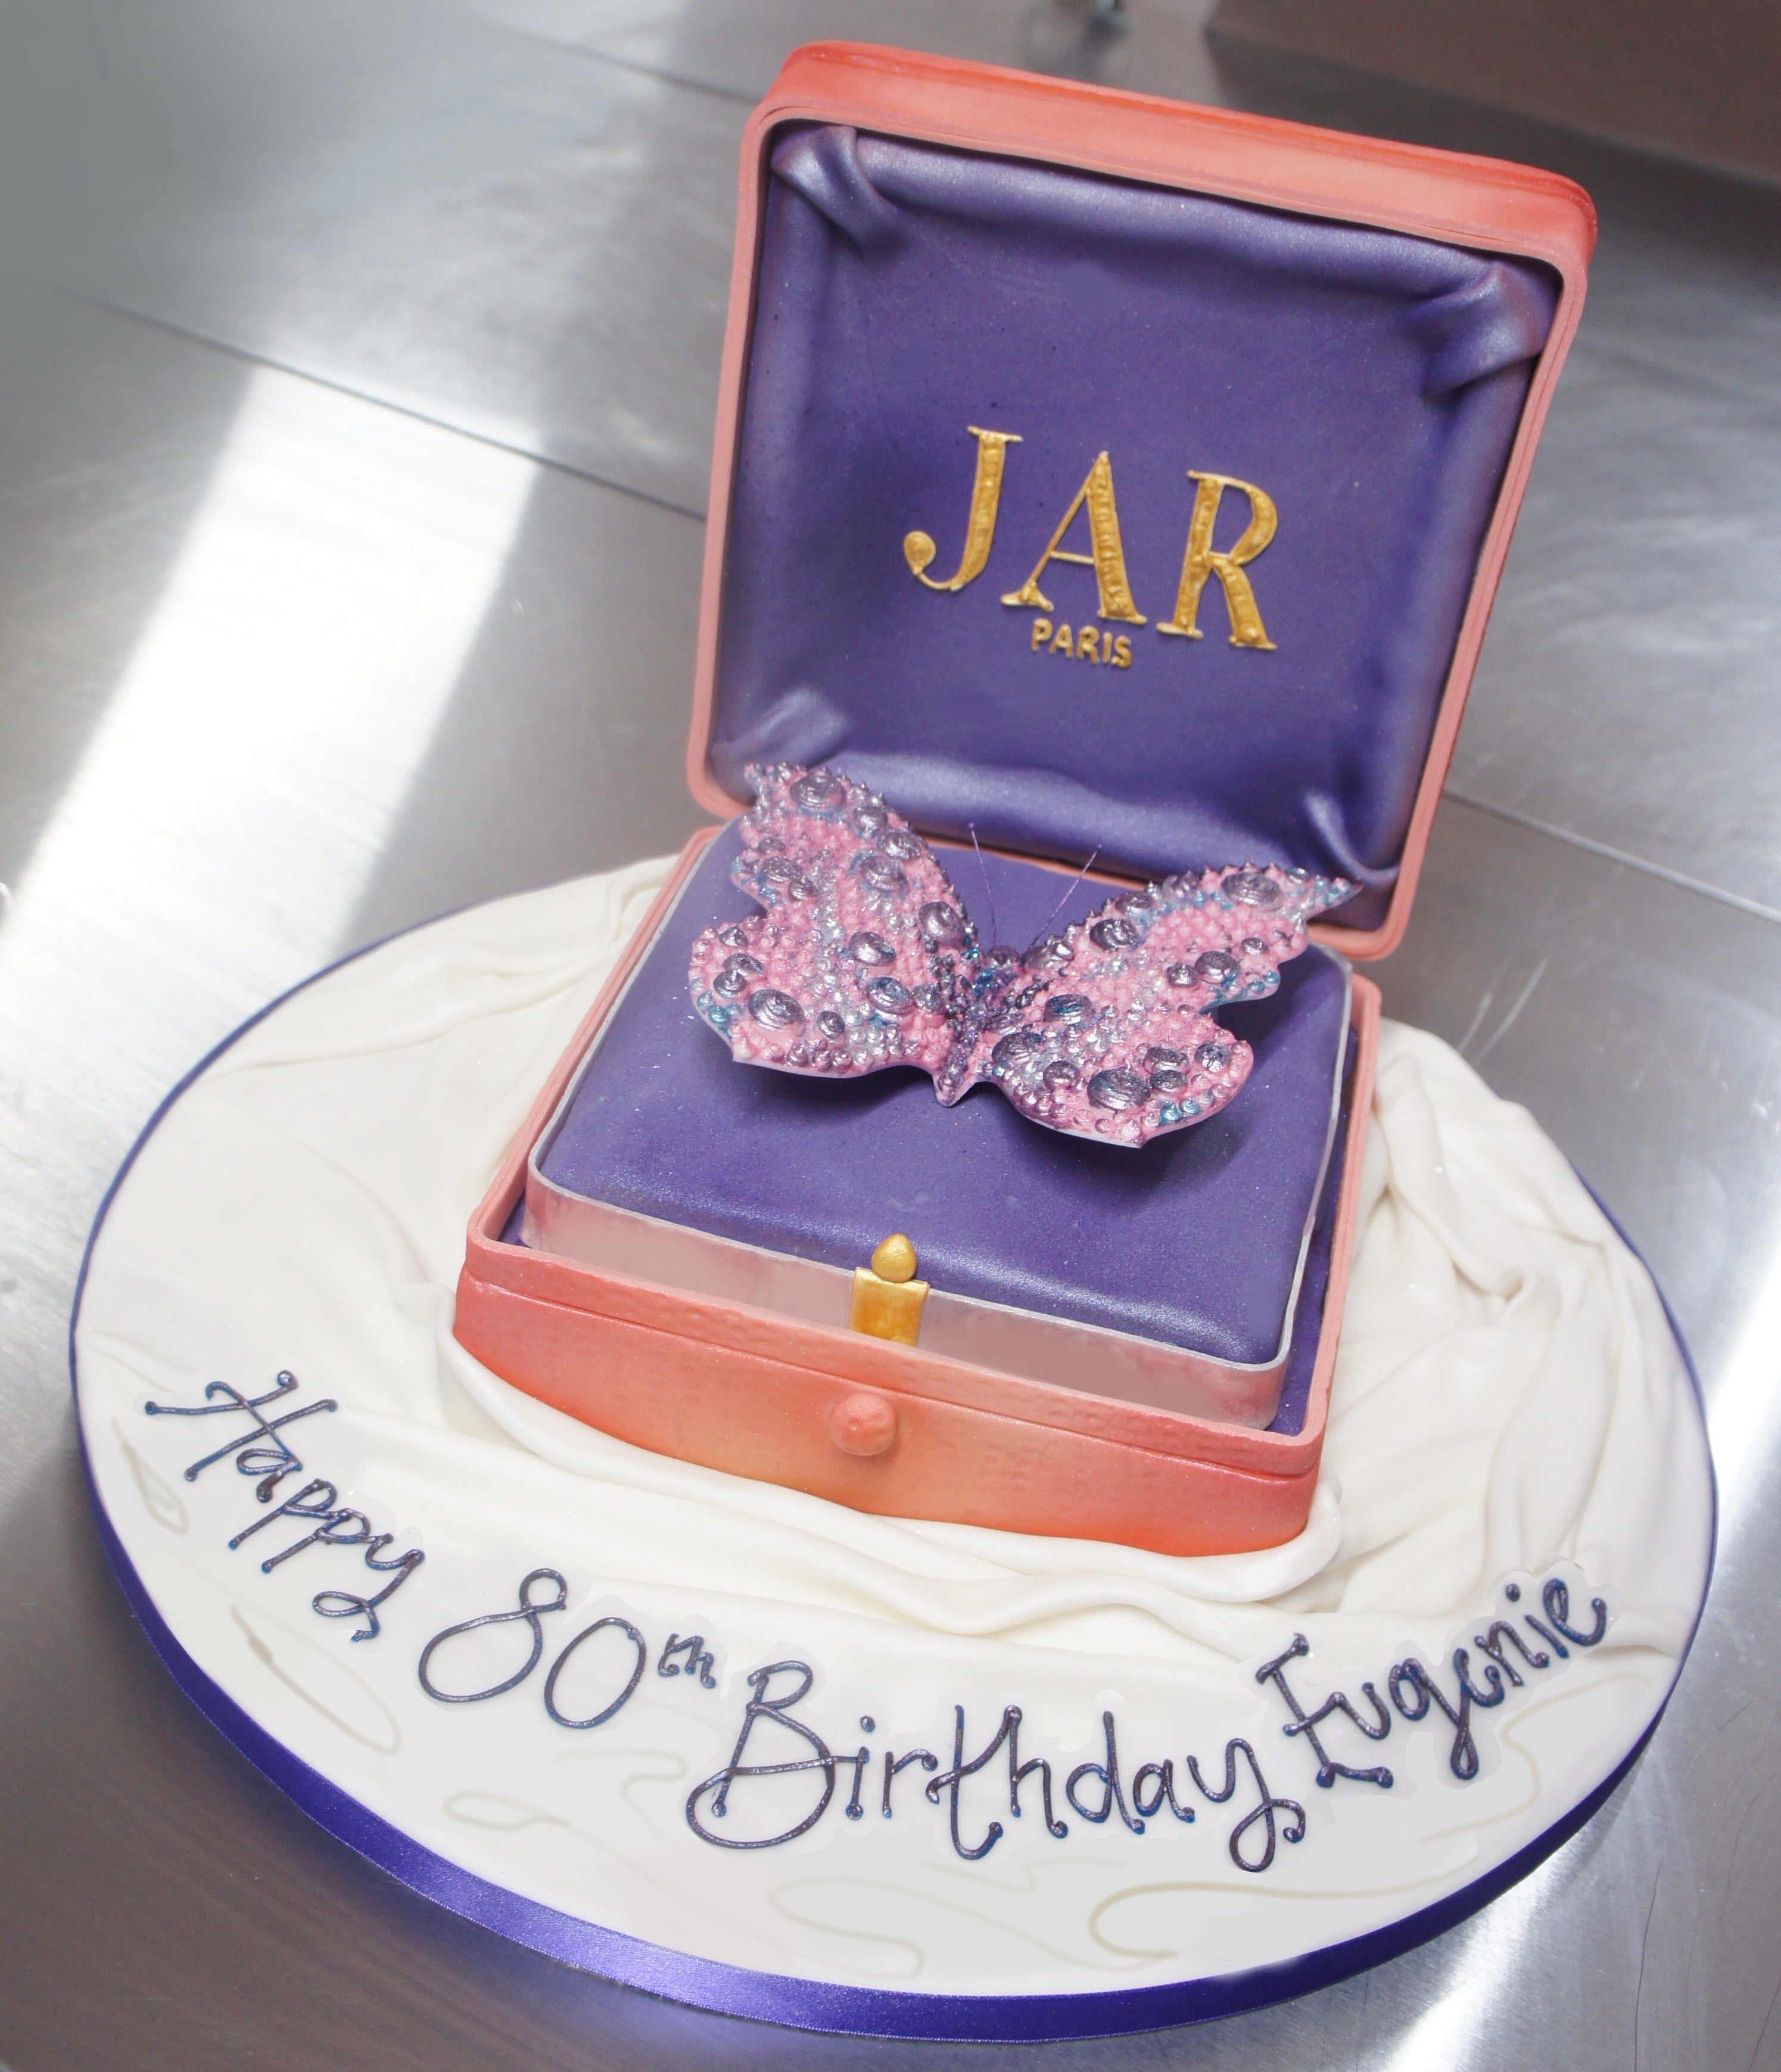 Indian Jewellery cake | Girly birthday cakes, Themed cakes, Cake designs  birthday